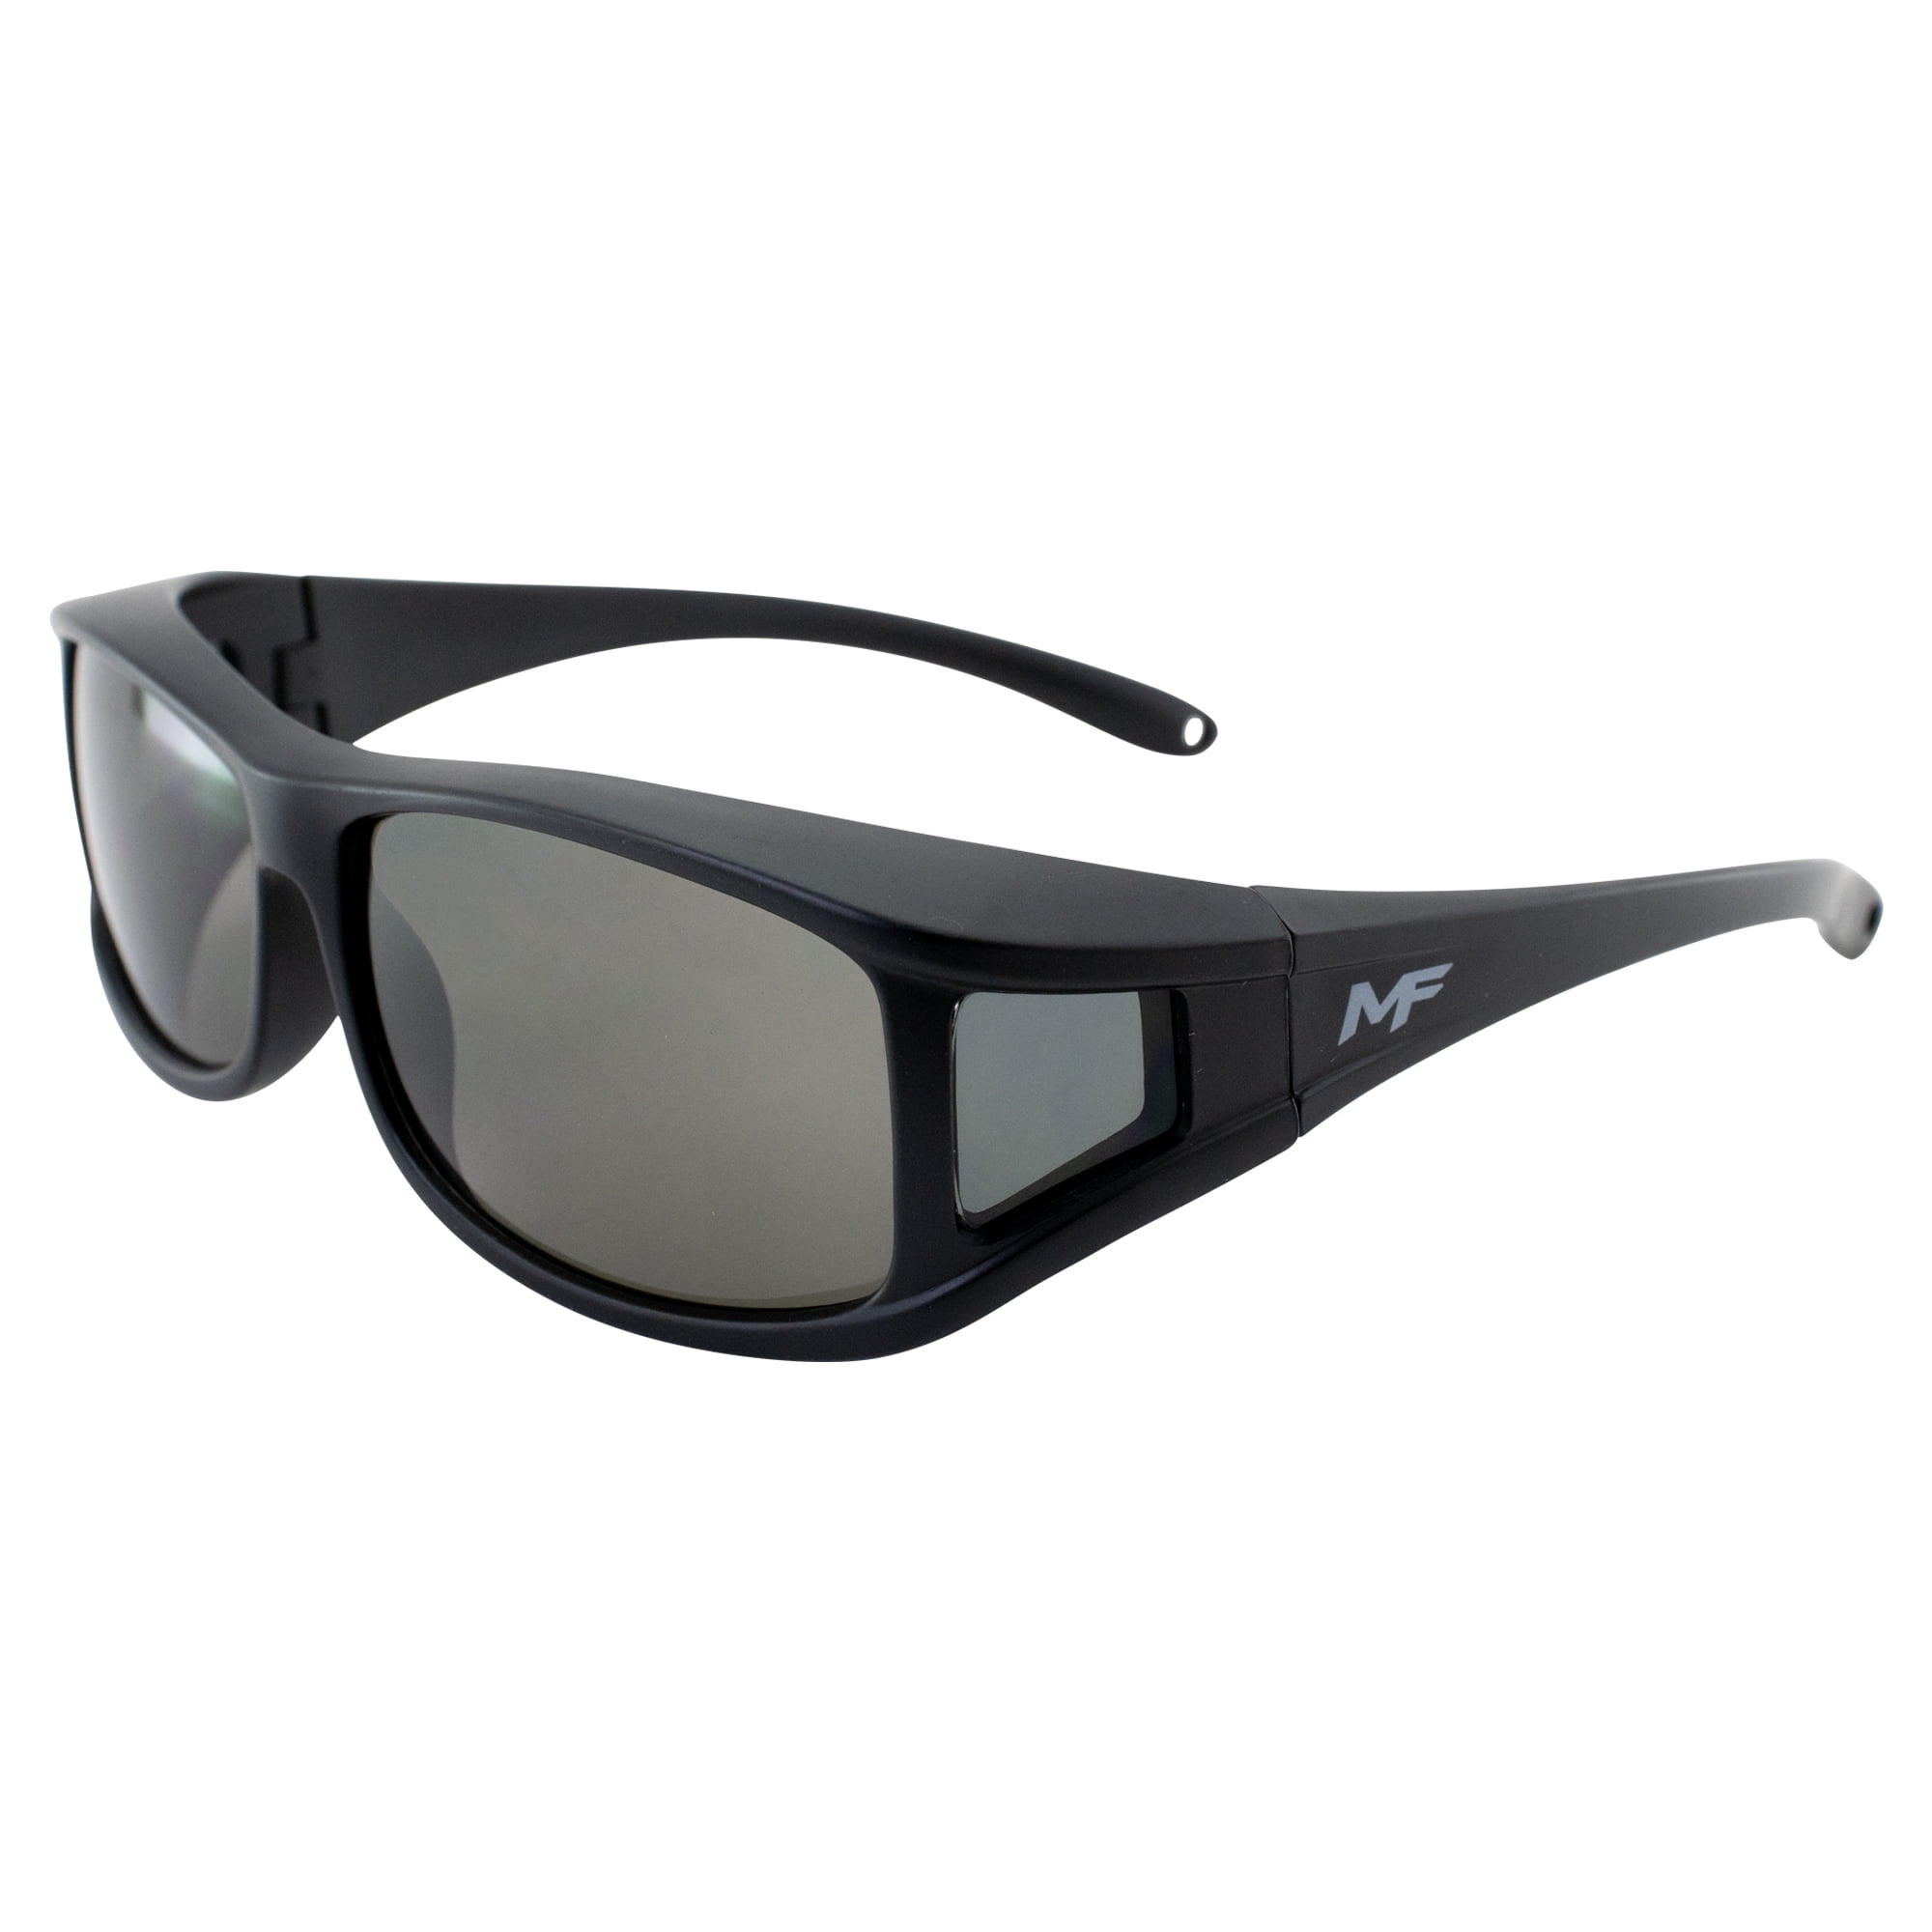 MotoFrame Sideshow Safety Sunglasses Fit Over Glasses Black Frame Smoke Lens